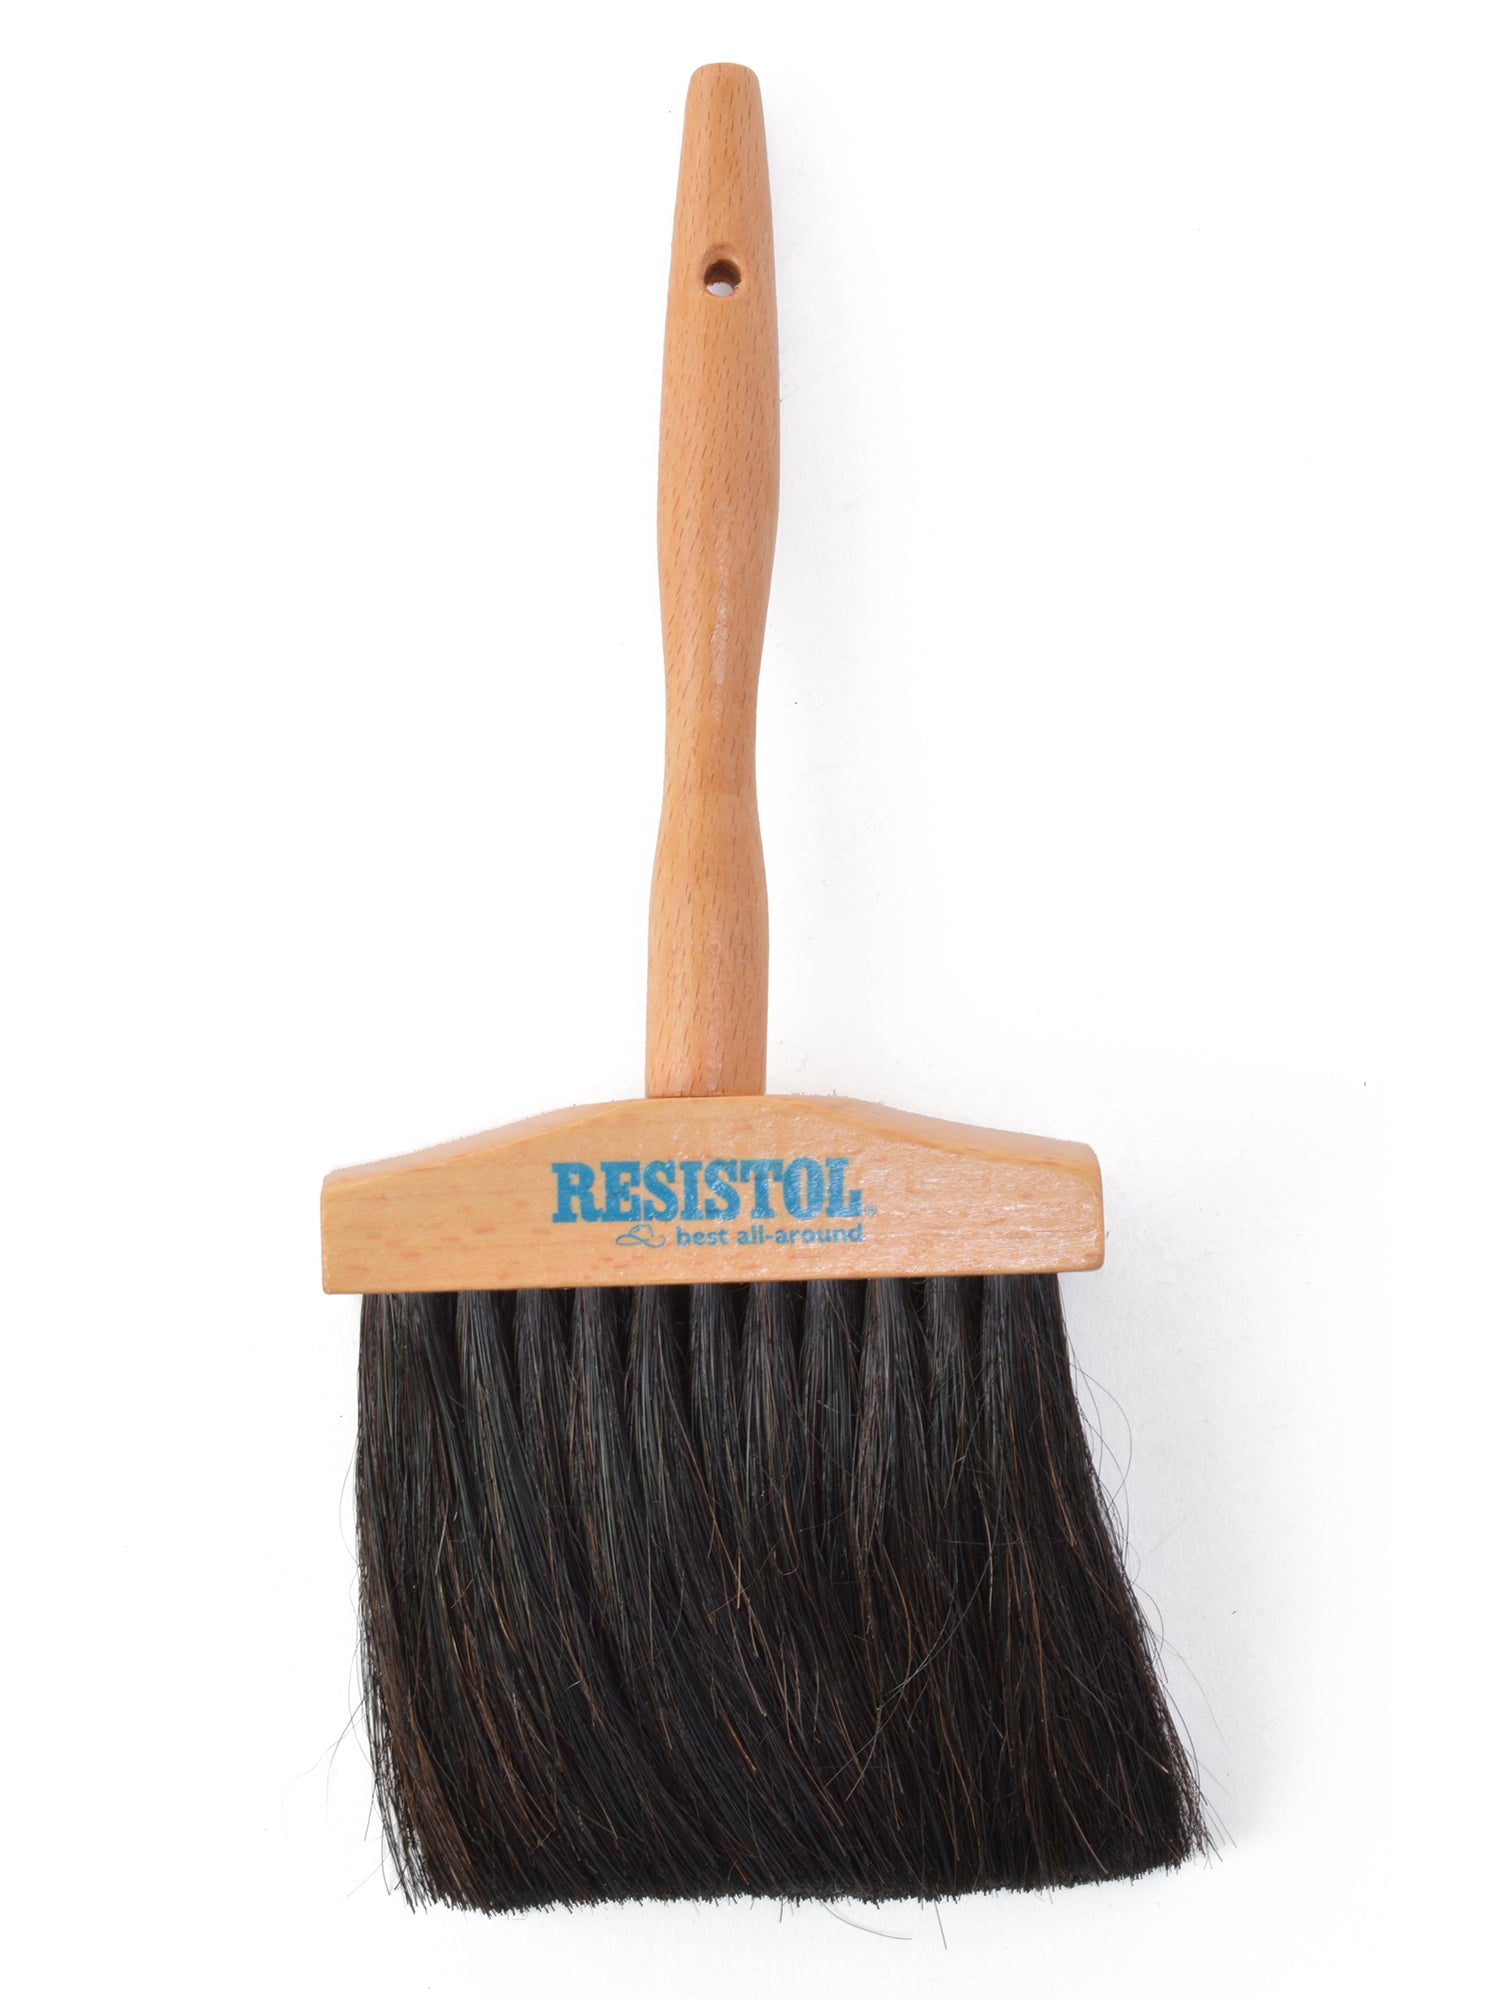 Resistol Hat Crown Brush For Dark Colored Hats